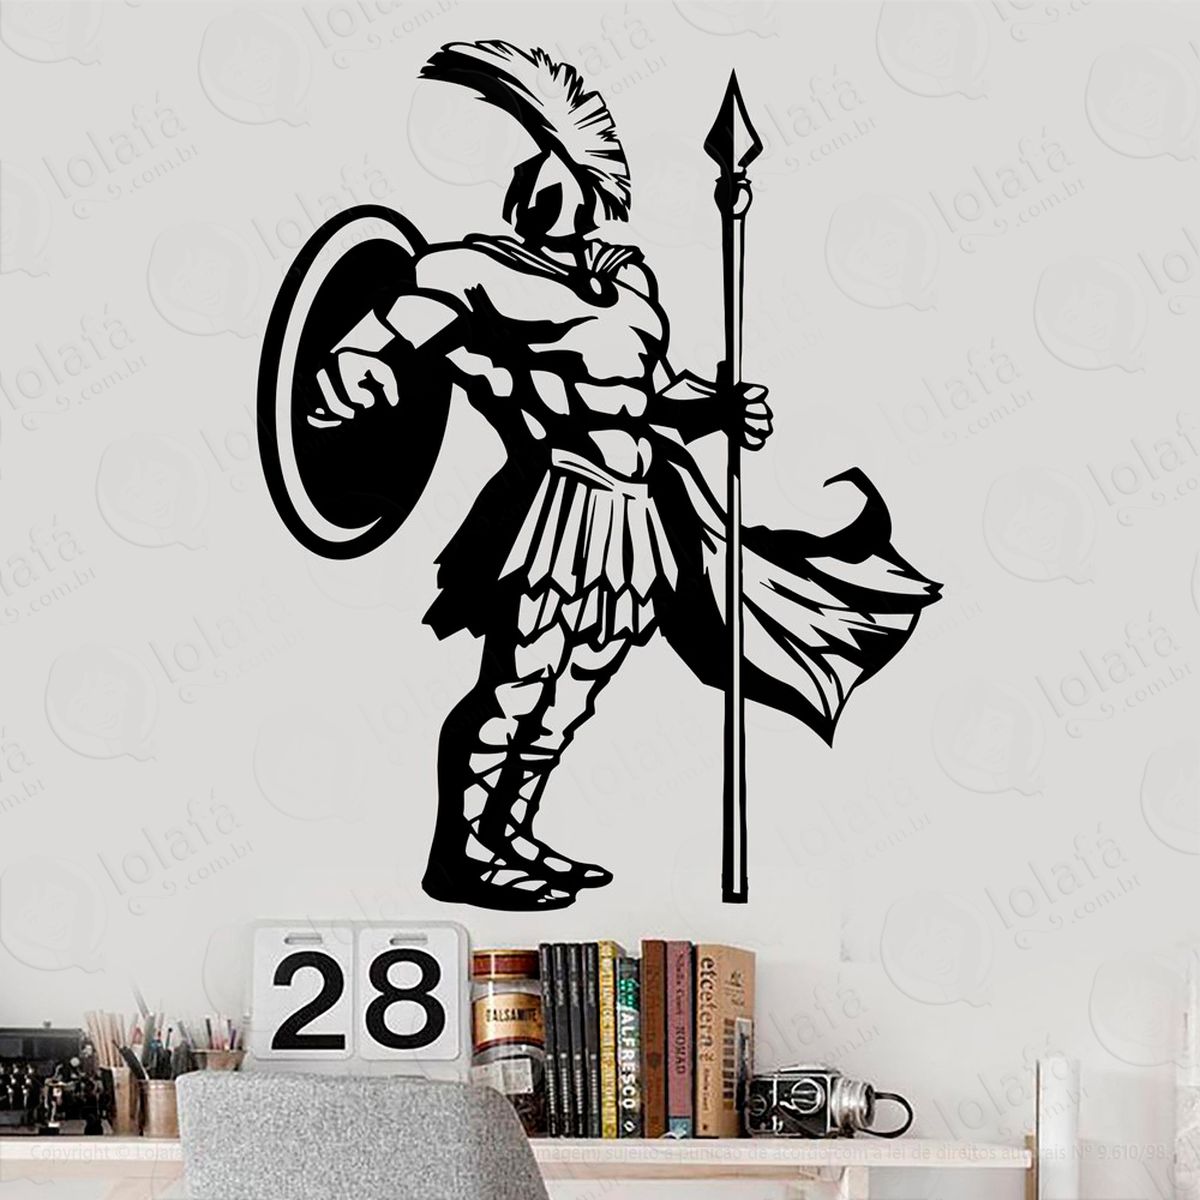 guerreiro adesivo de parede decorativo para casa, sala, quarto e vidro - mod:58